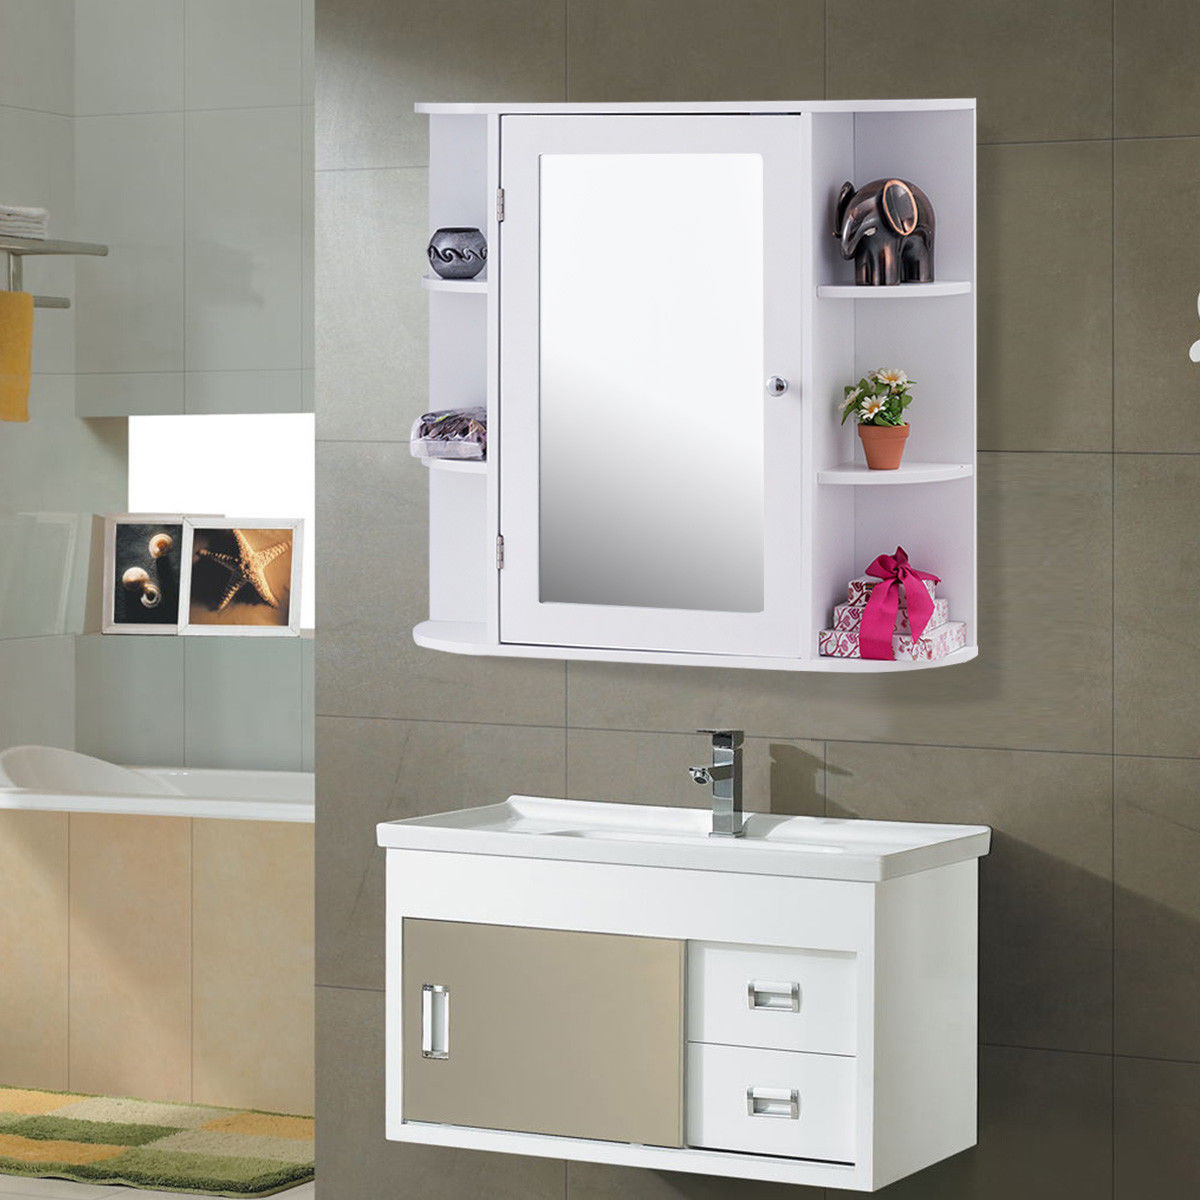 Mirrored Bathroom Cabinets
 Giantex Multipurpose Mount Wall Surface Bathroom Storage